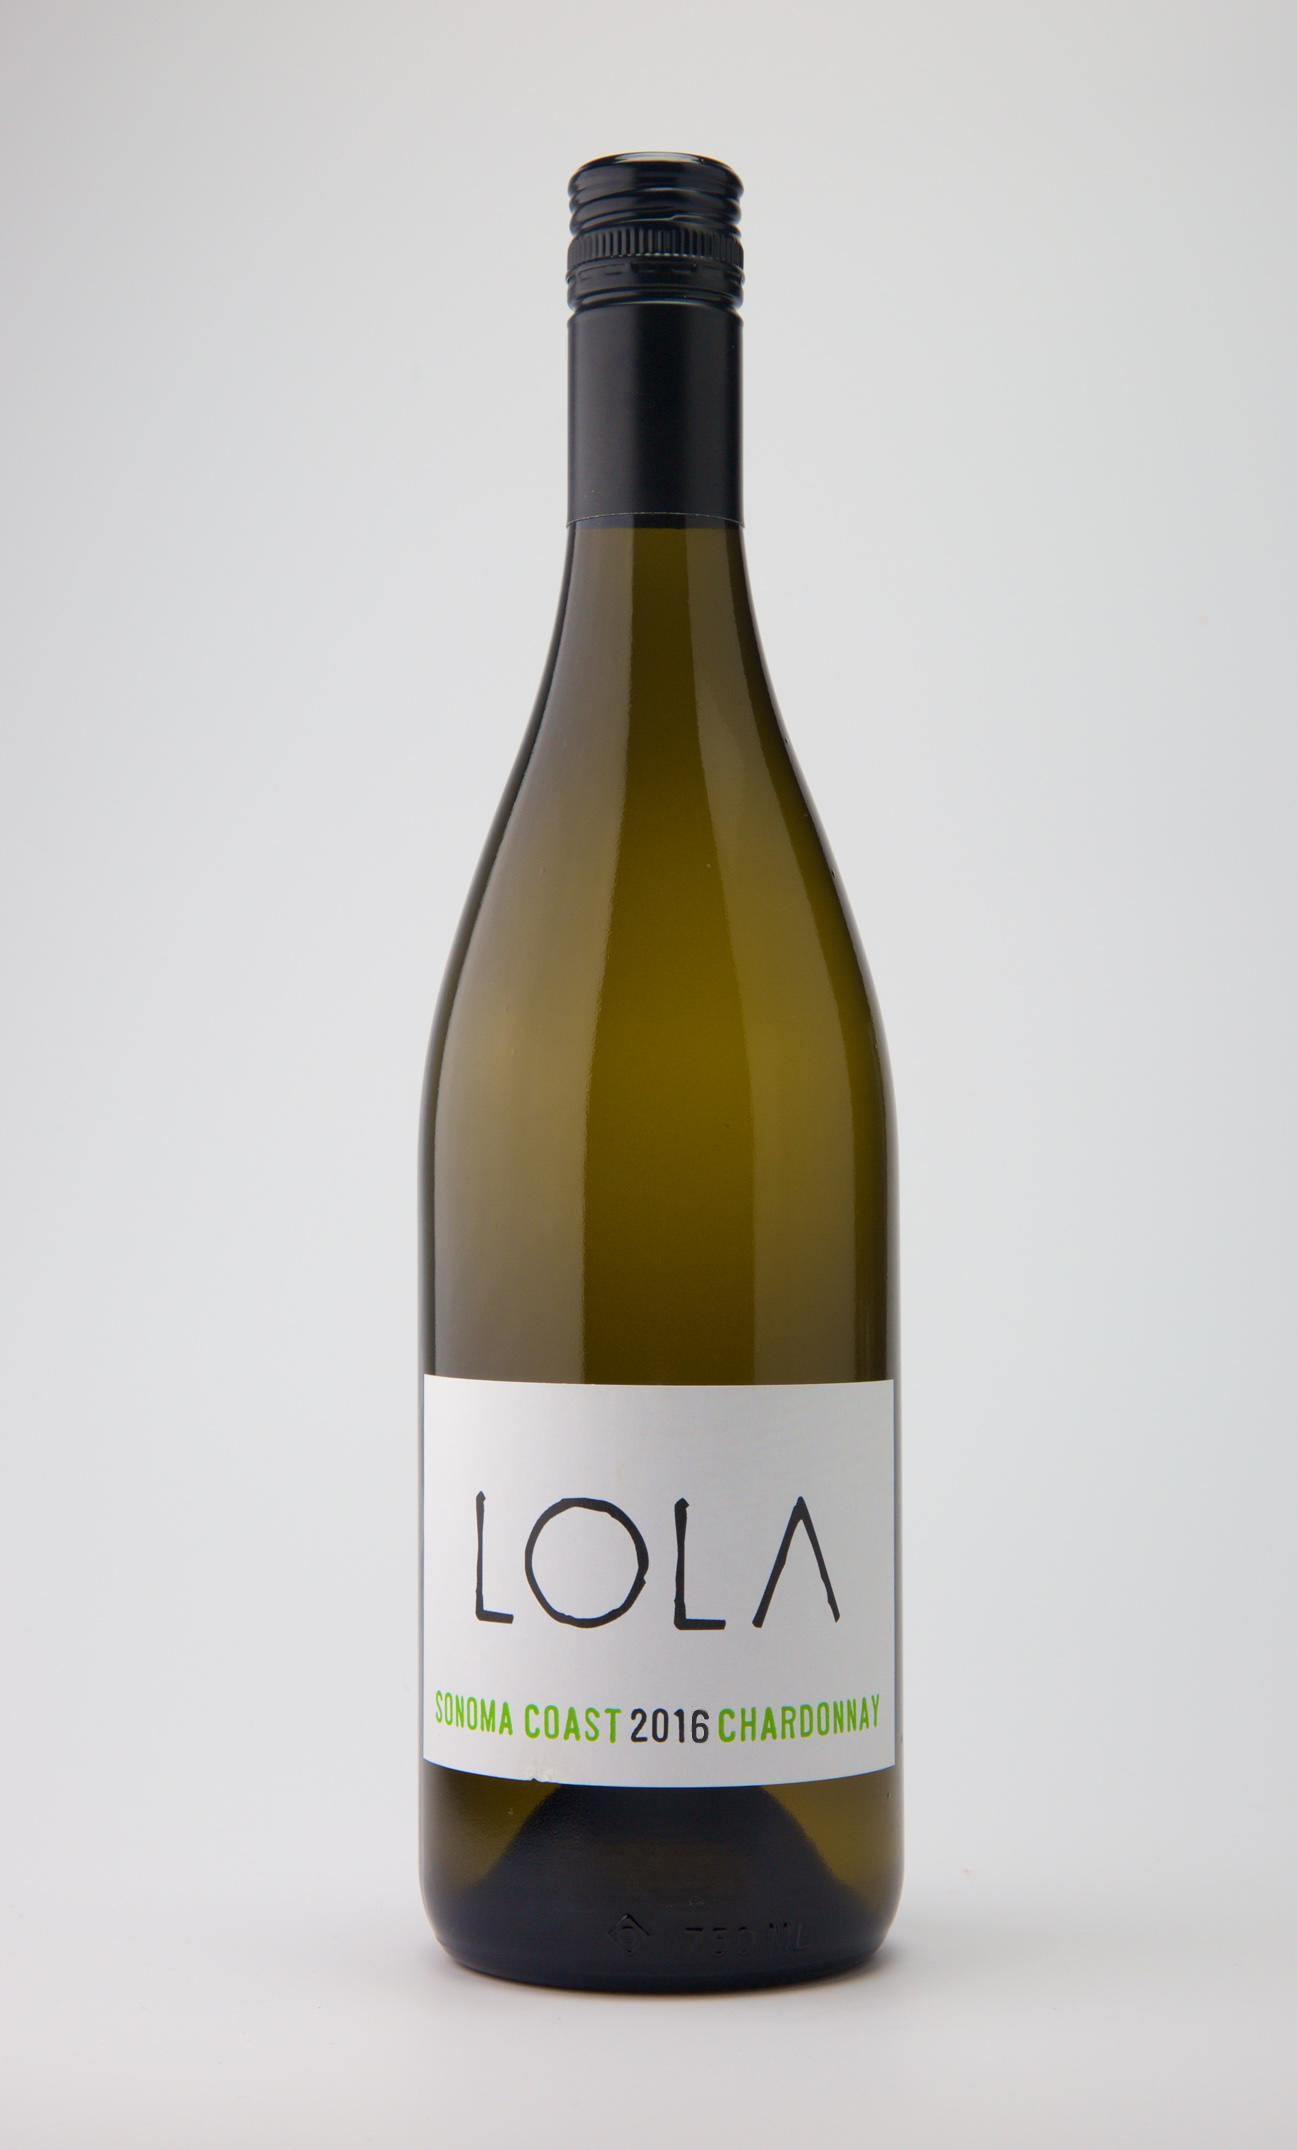 2017 Lola Winery Chardonnay Sonoma - click image for full description